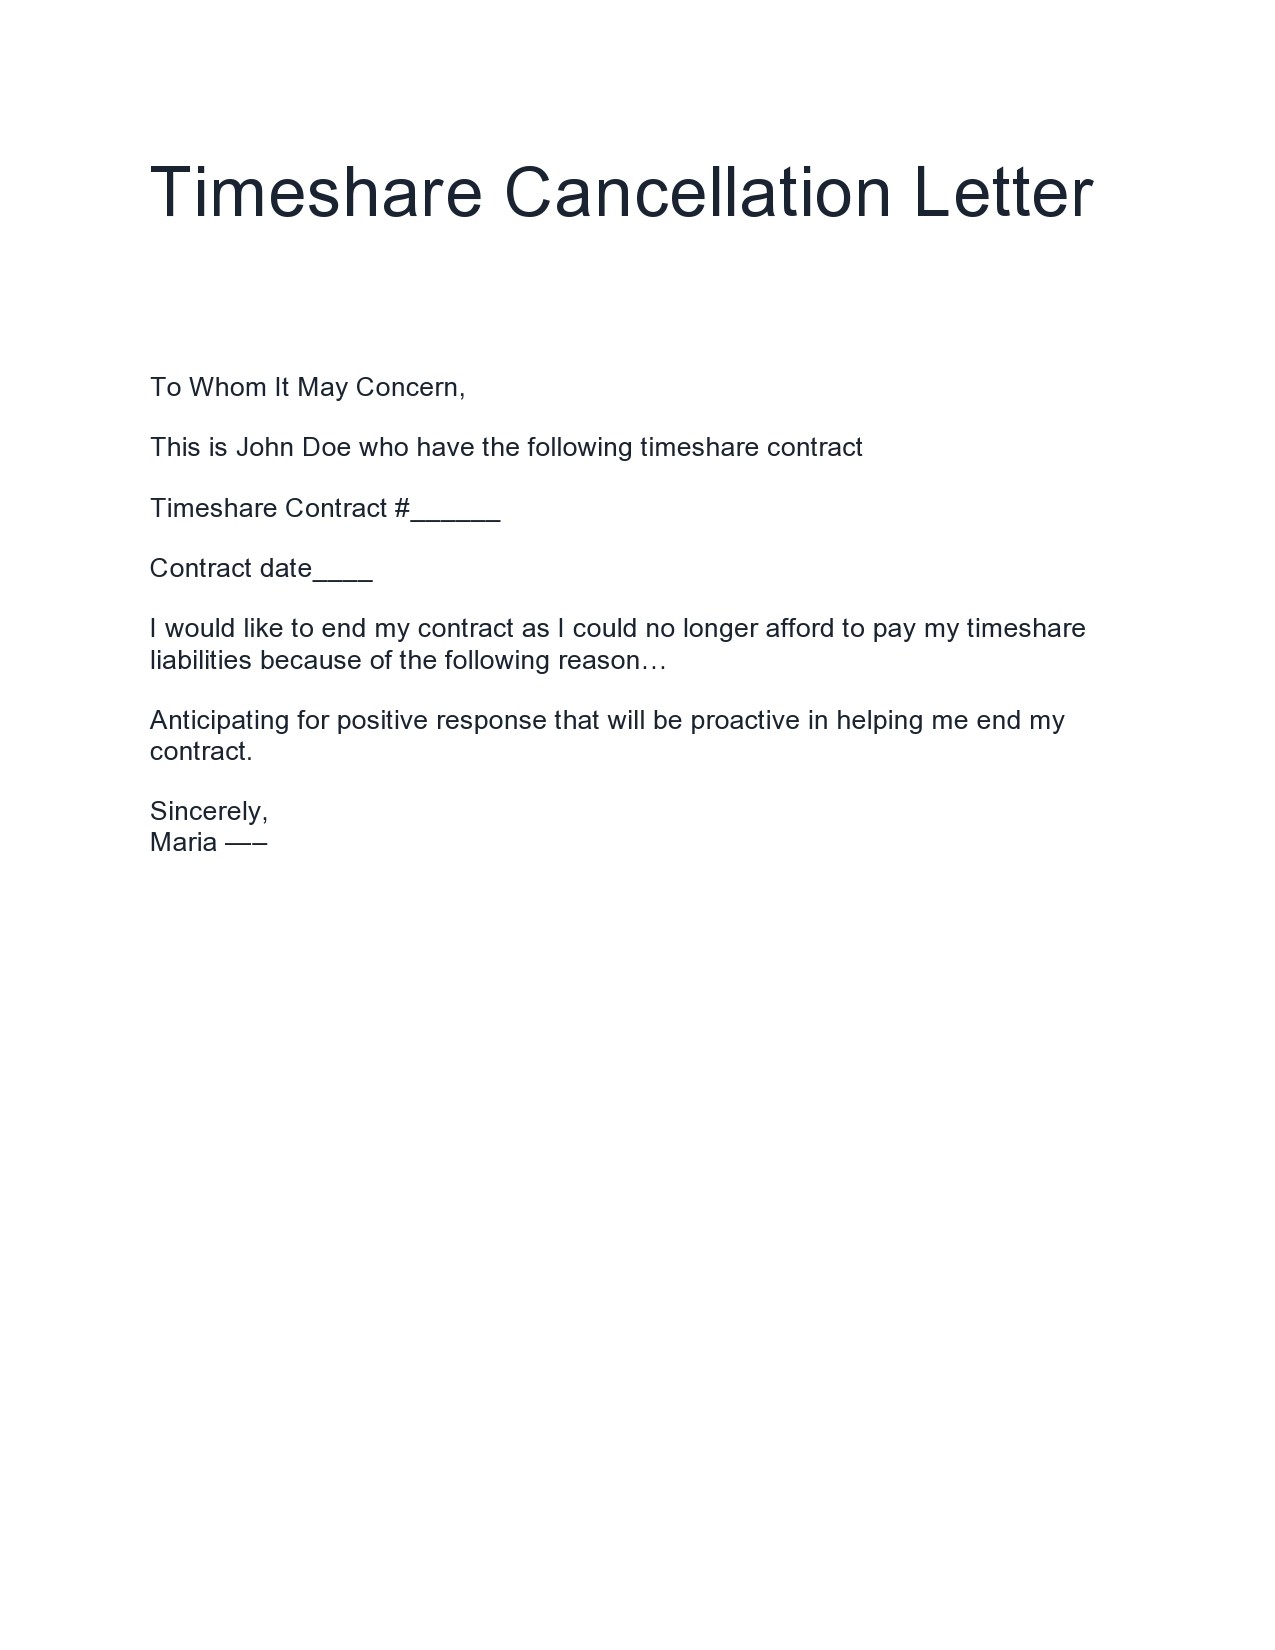 Free timeshare cancellation 20